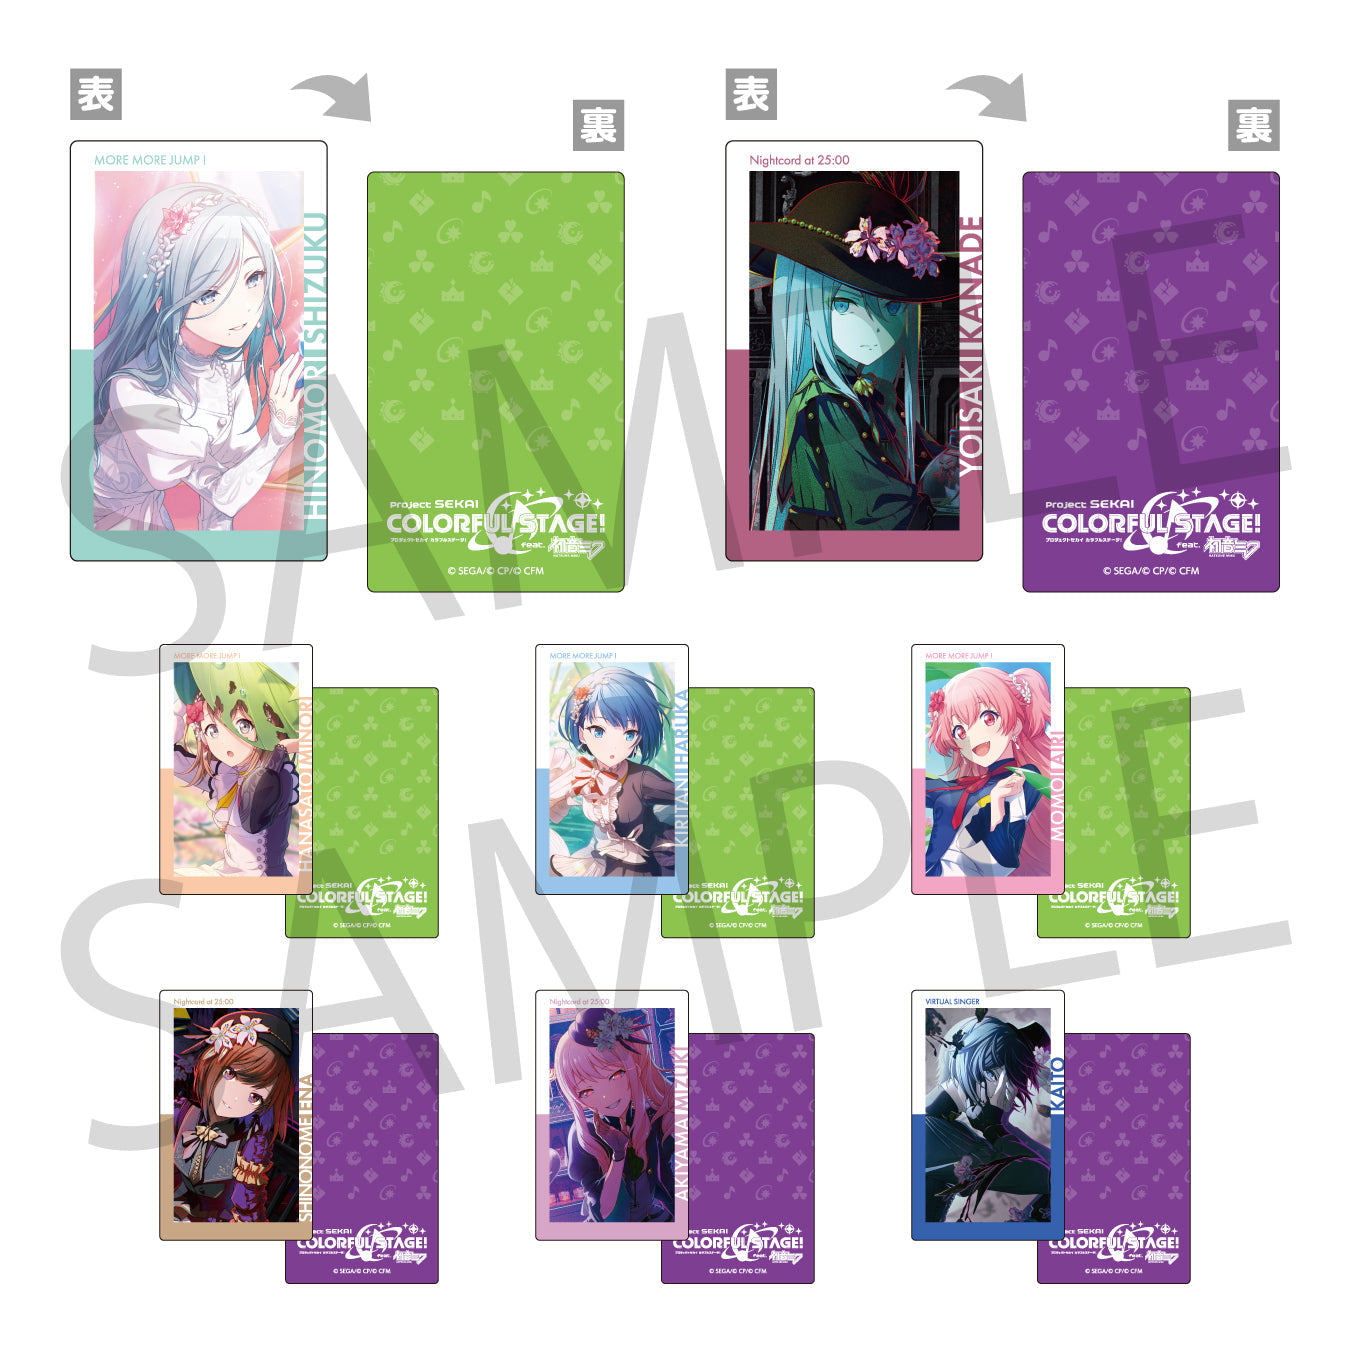 【予約商品】ePick card series vol.15 C BOX 特典付き［MEIKO］